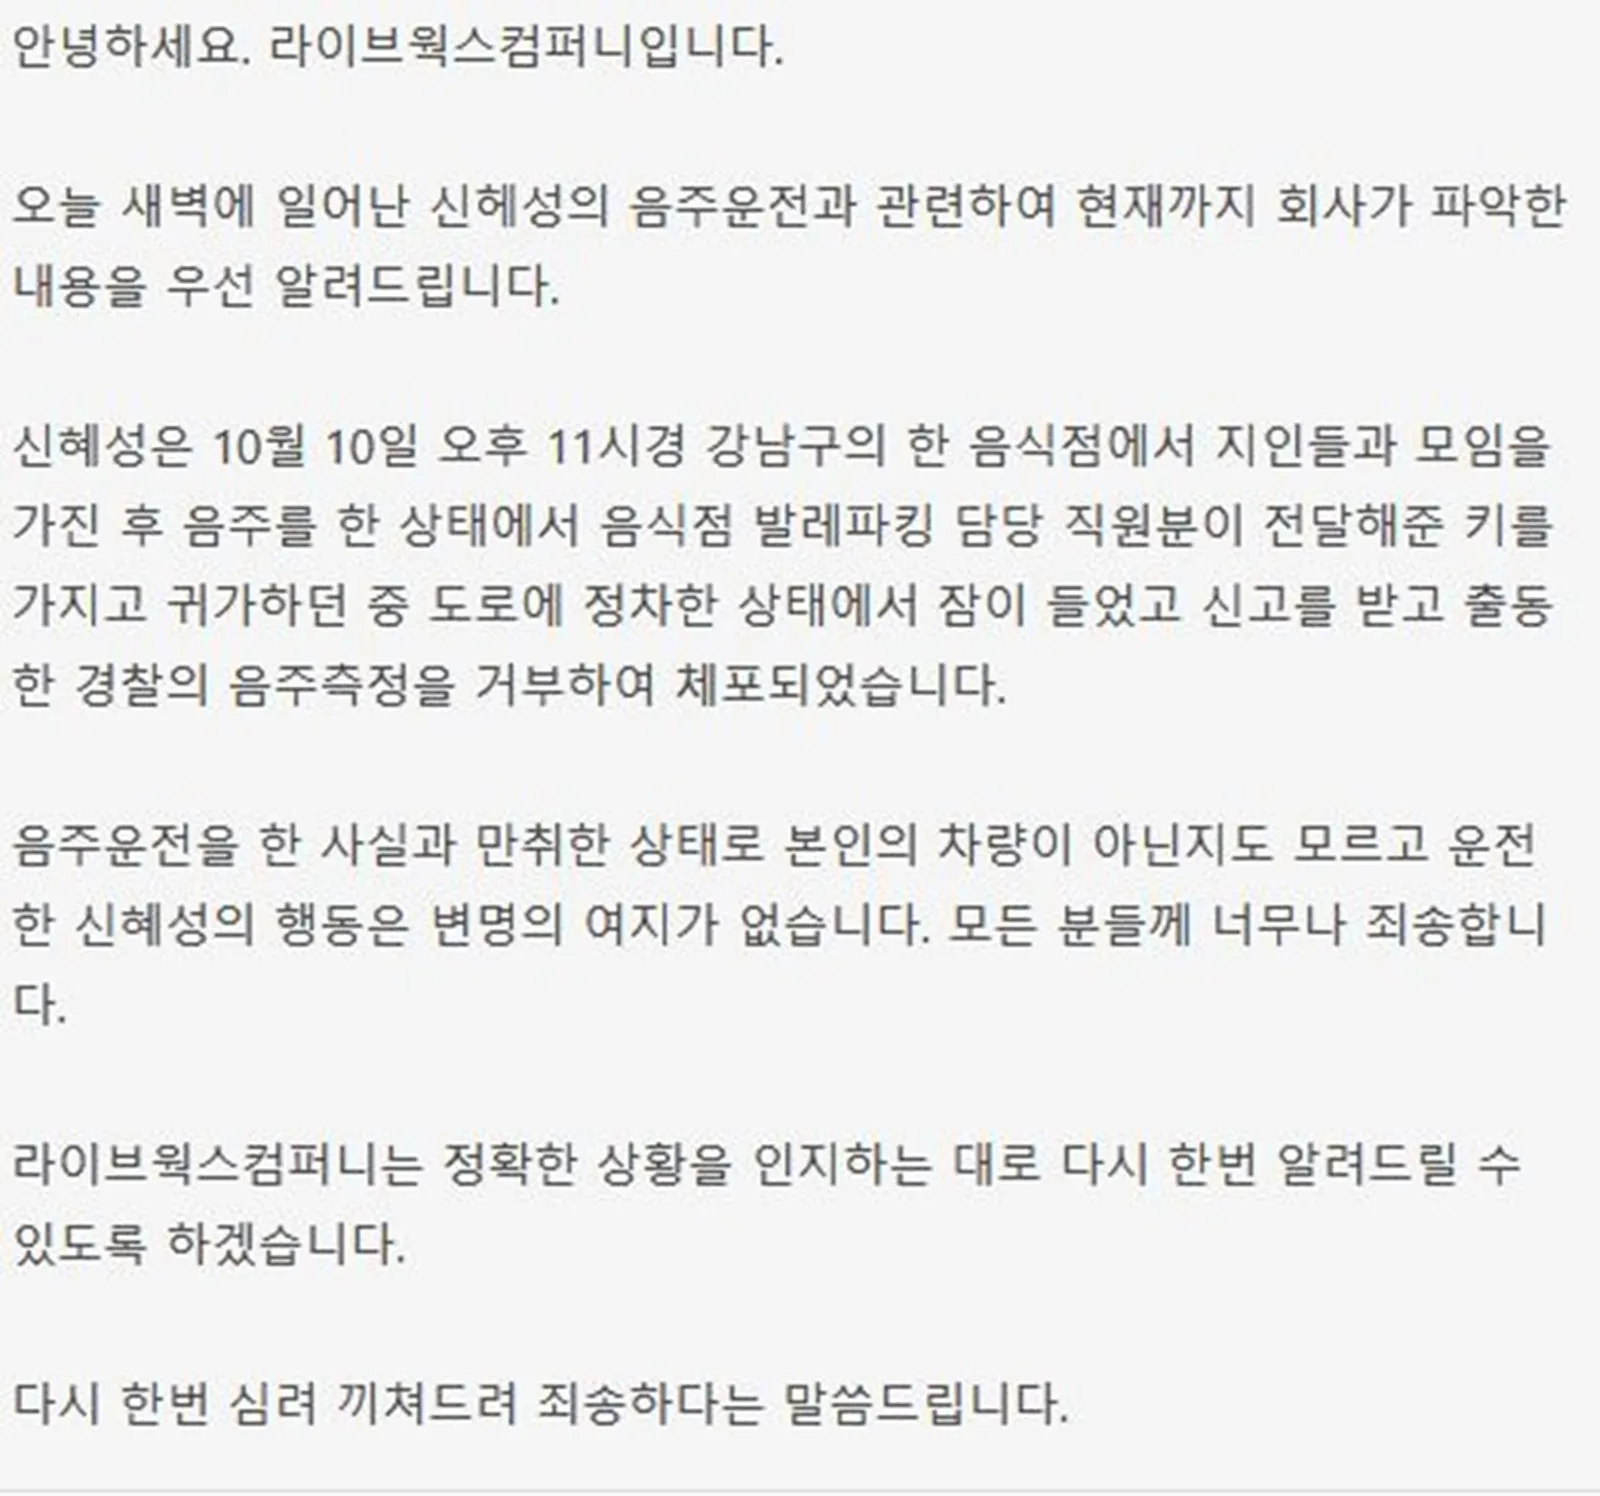 Hyesung 'Shinhwa' Ditangkap Kepolisian Korea, Ini Kronologinya